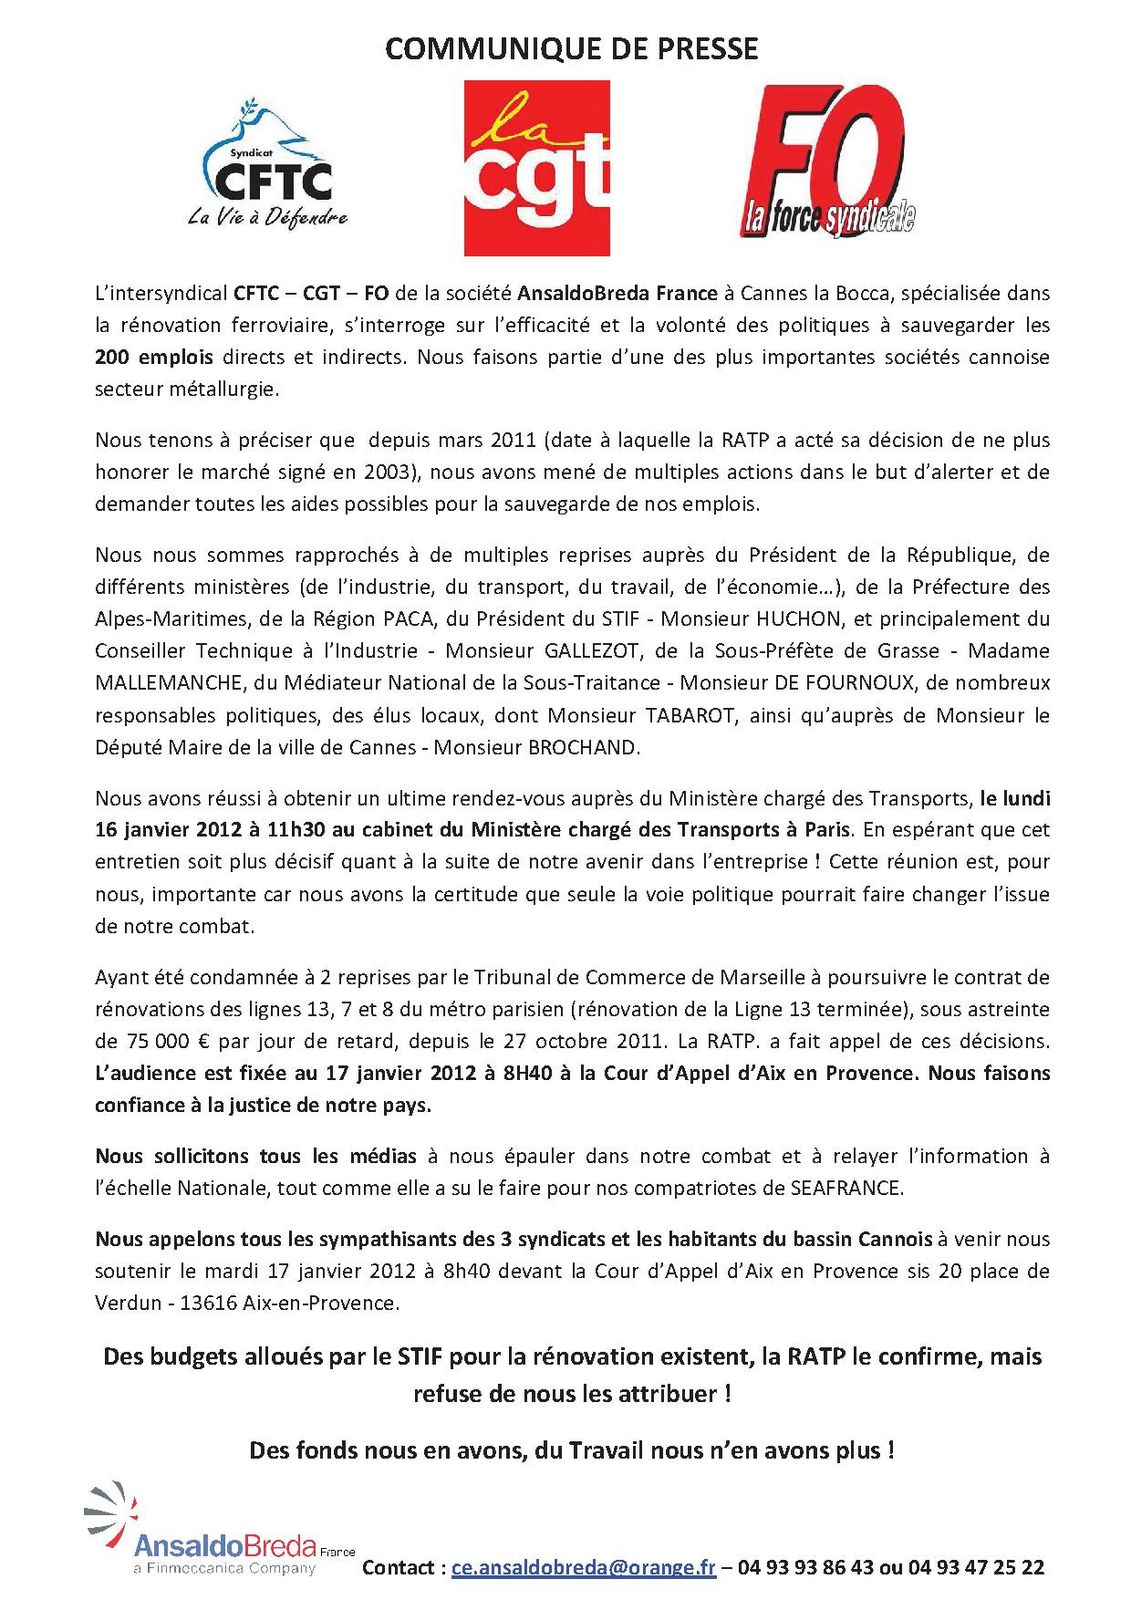 COMMUNIQUE DE PRESSE INTERSYNDICAL ABF du 10.01.2012